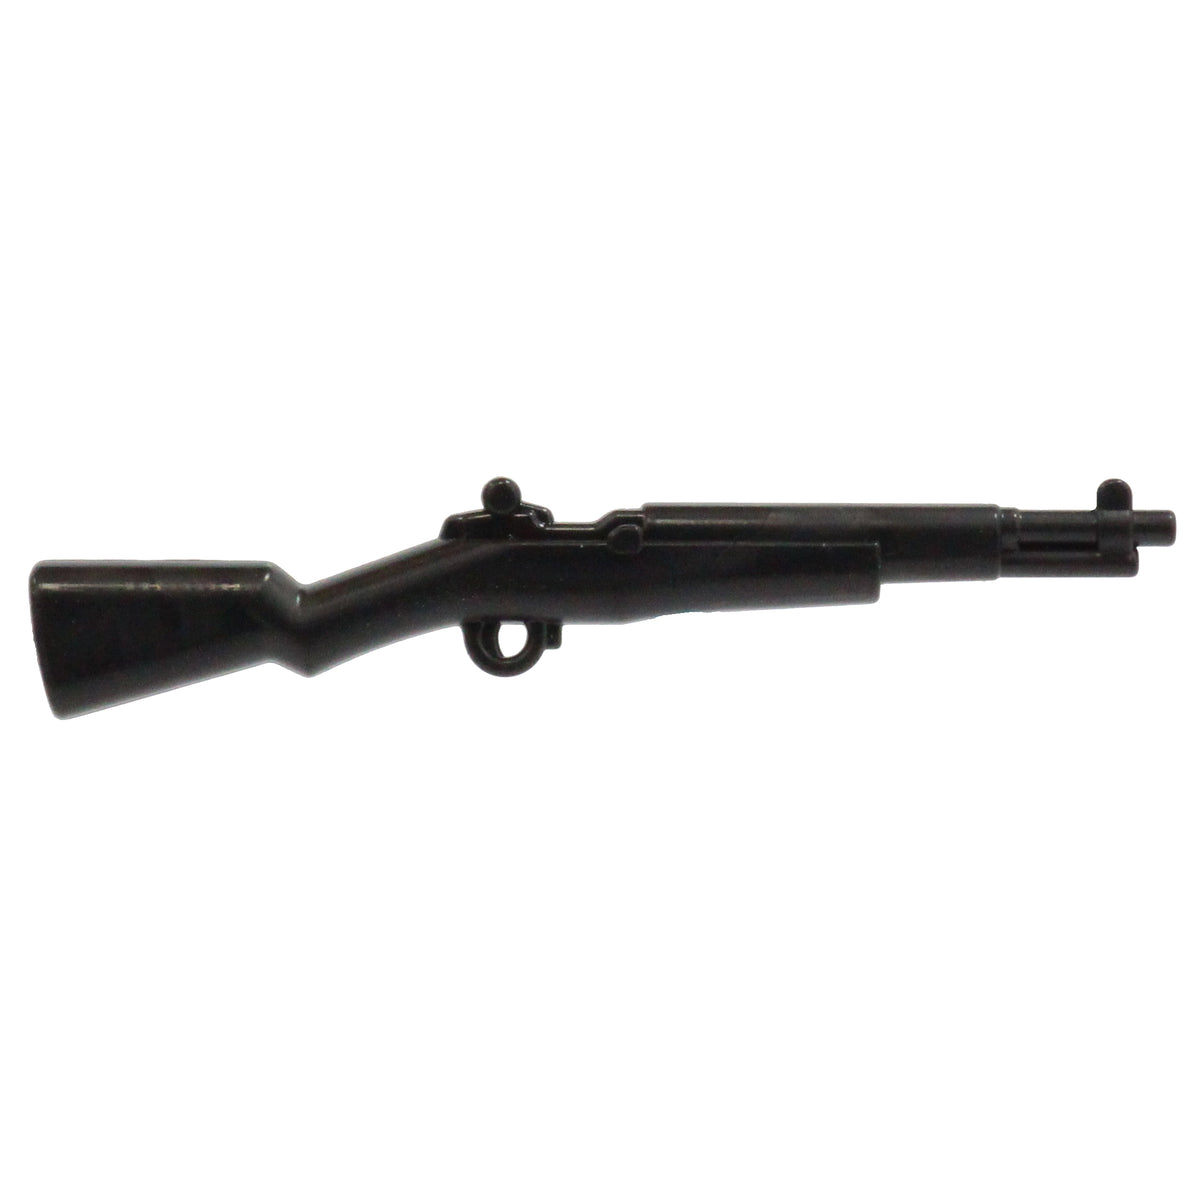 black and white ww2 m1 garand rifle